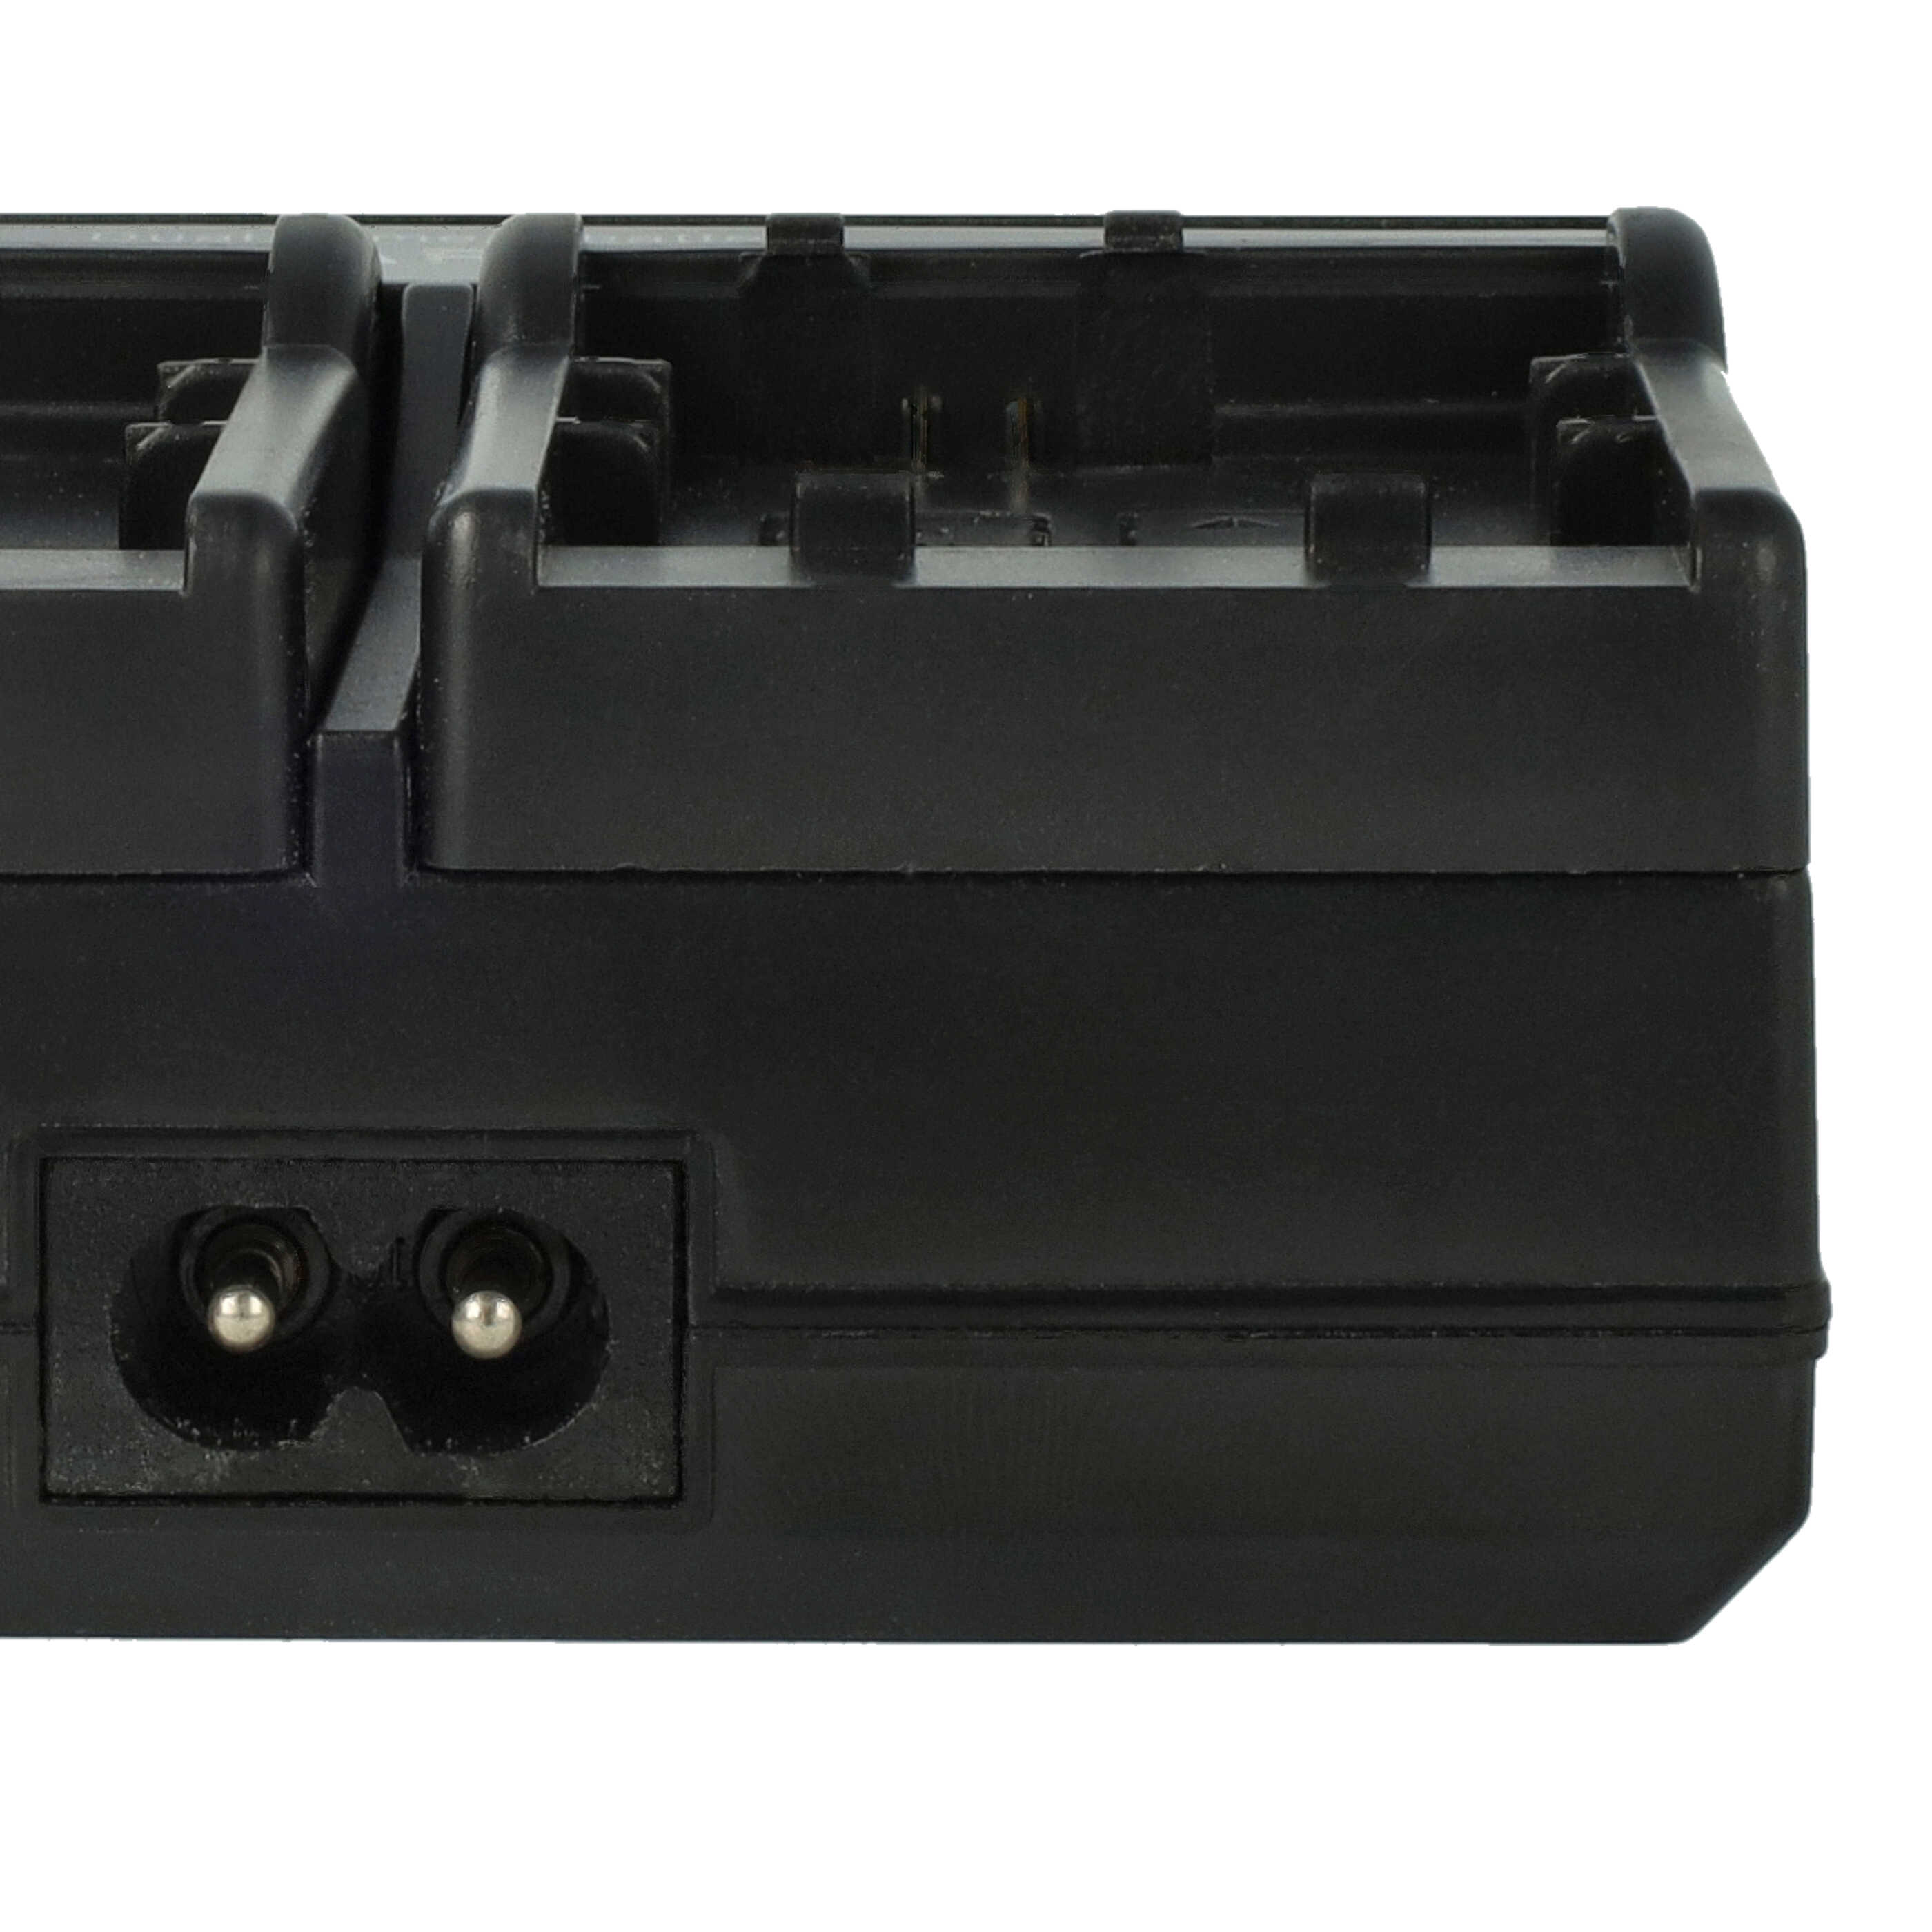 Ładowarka do aparatu Sony NP-FW50 i innych - ładowarka akumulatora 0.5 / 0.9 A, 4.2/8.4 V